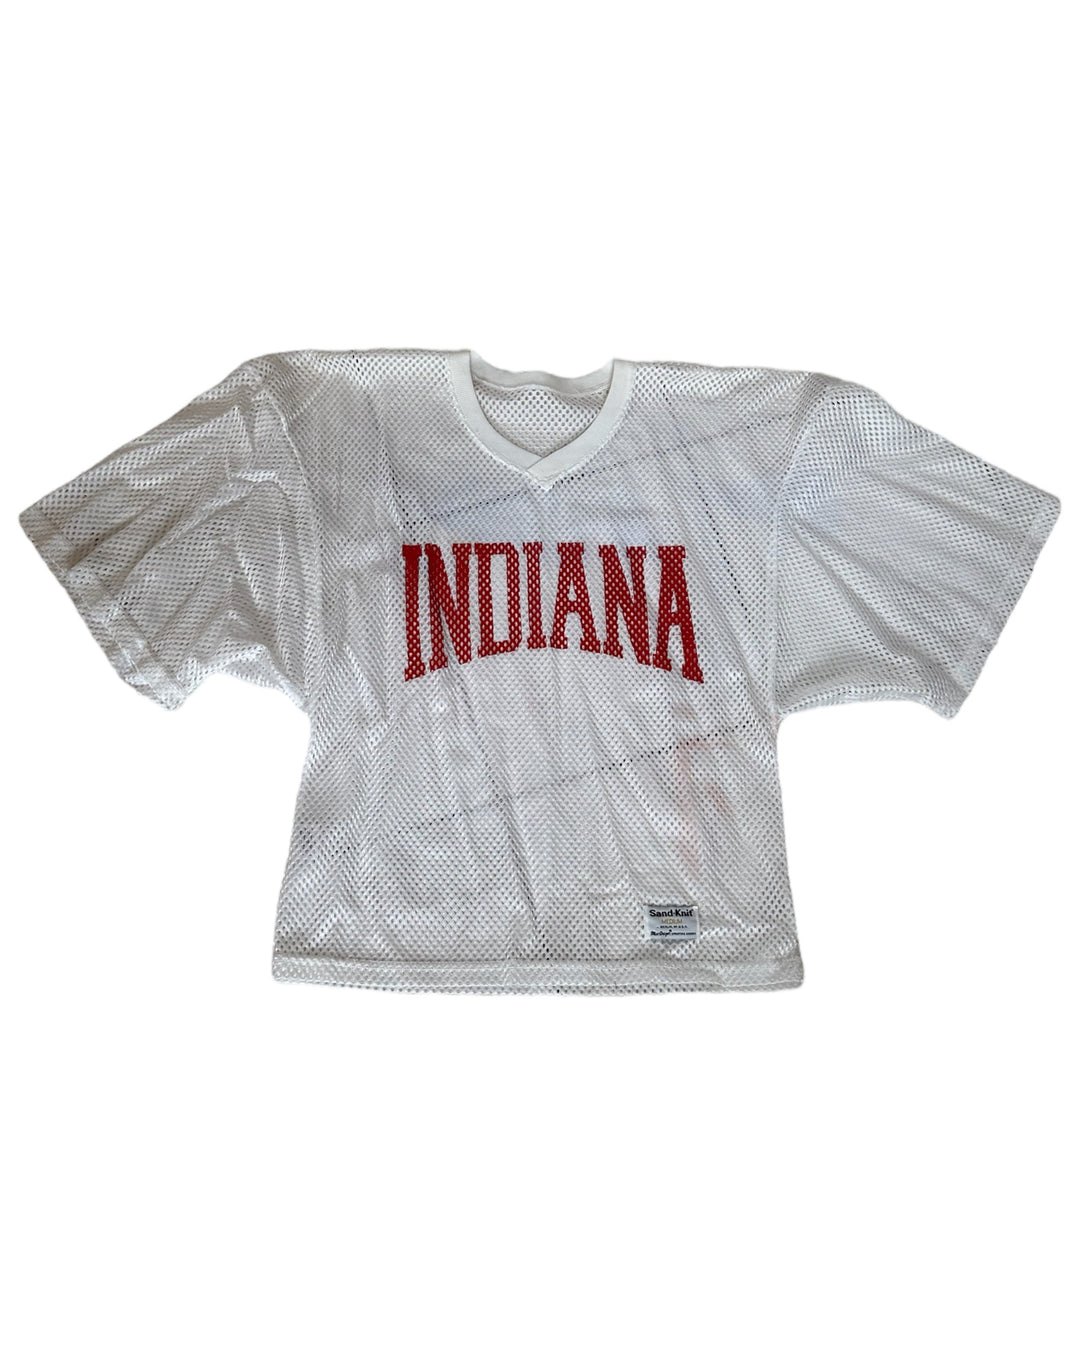 Indiana Vintage Jersey